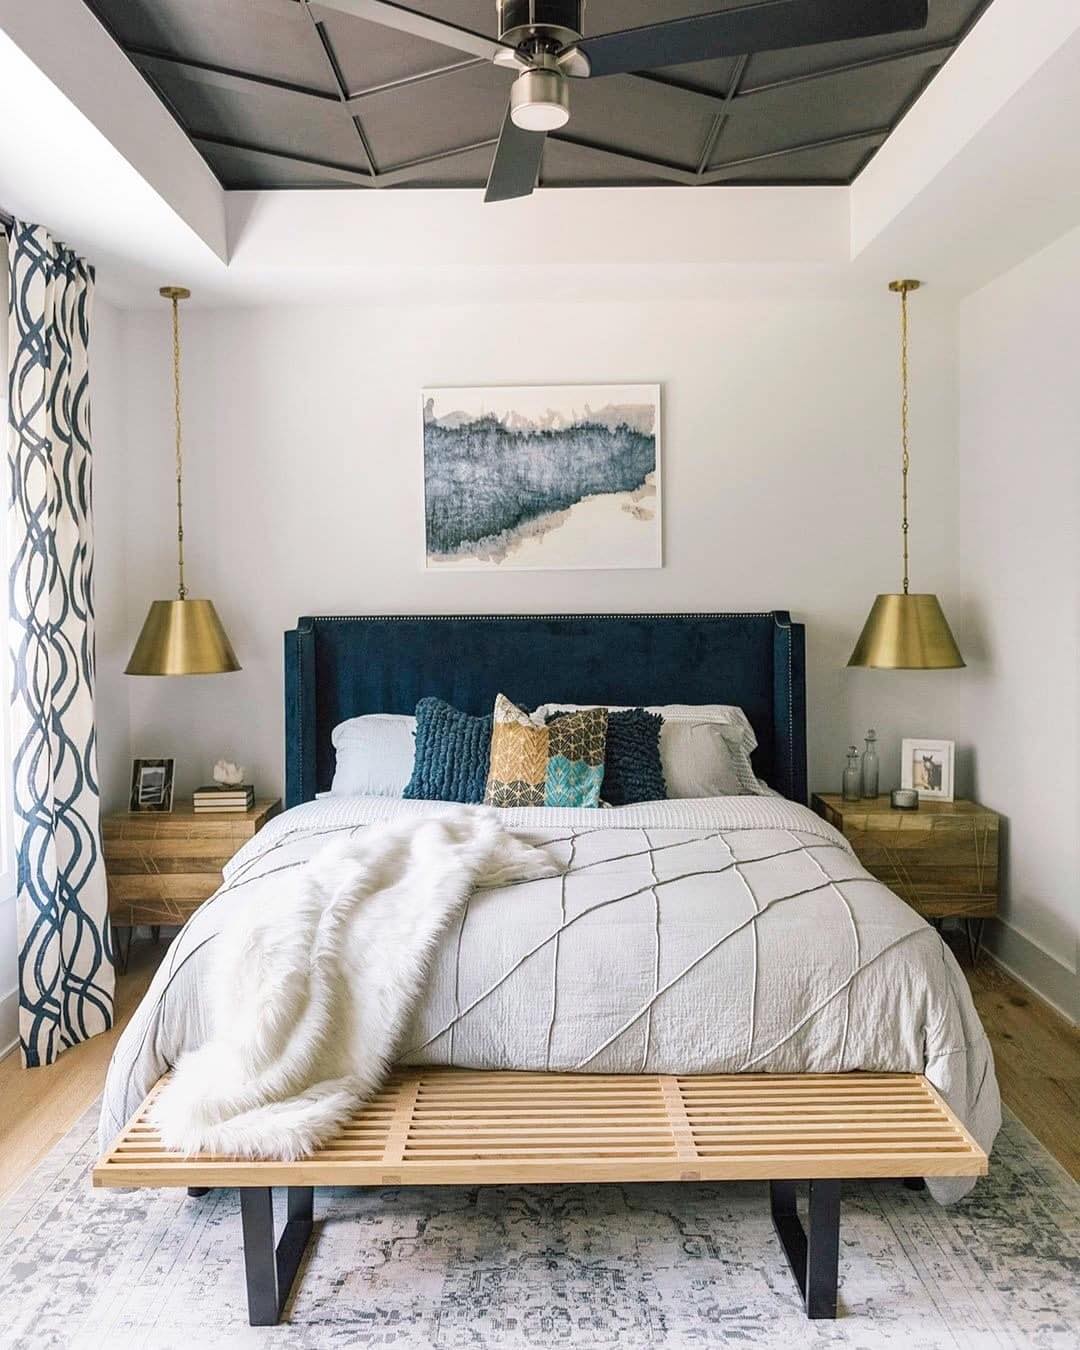 Well-balanced bedroom design. Photo by Instagram user @dalishaffner